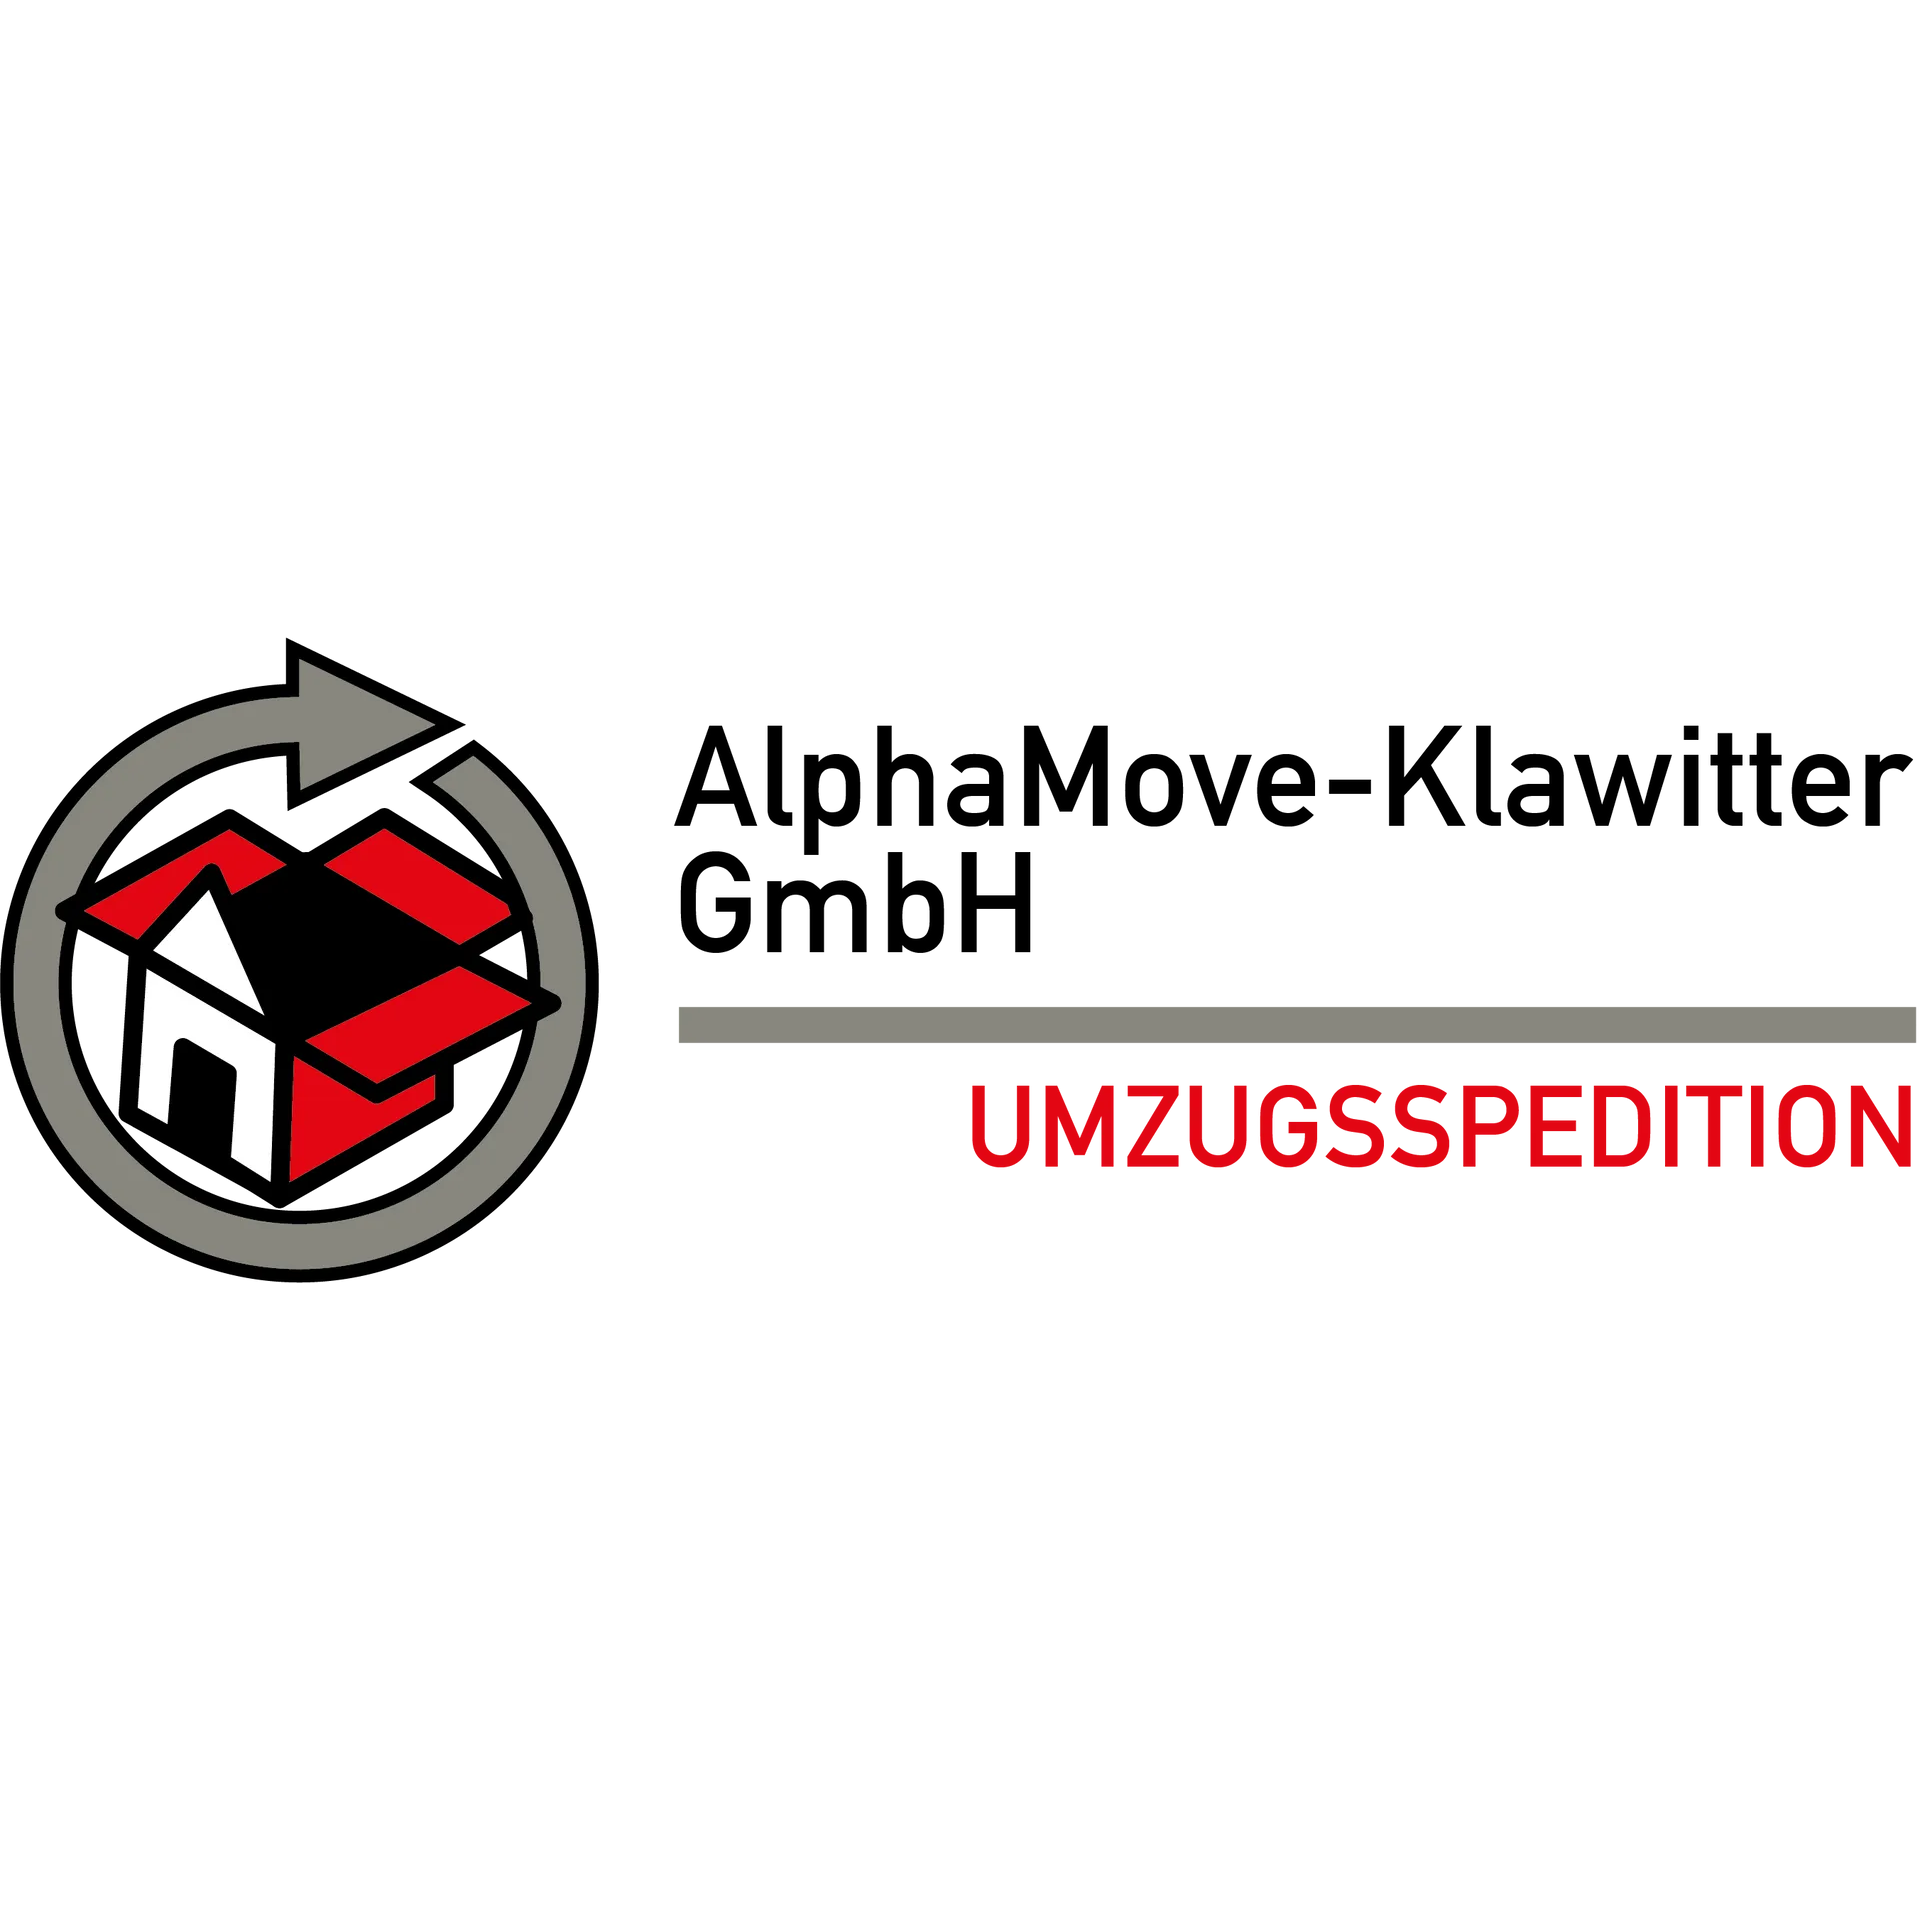 AlphaMove-Klawitter GmbH in Schwerin in Mecklenburg - Logo